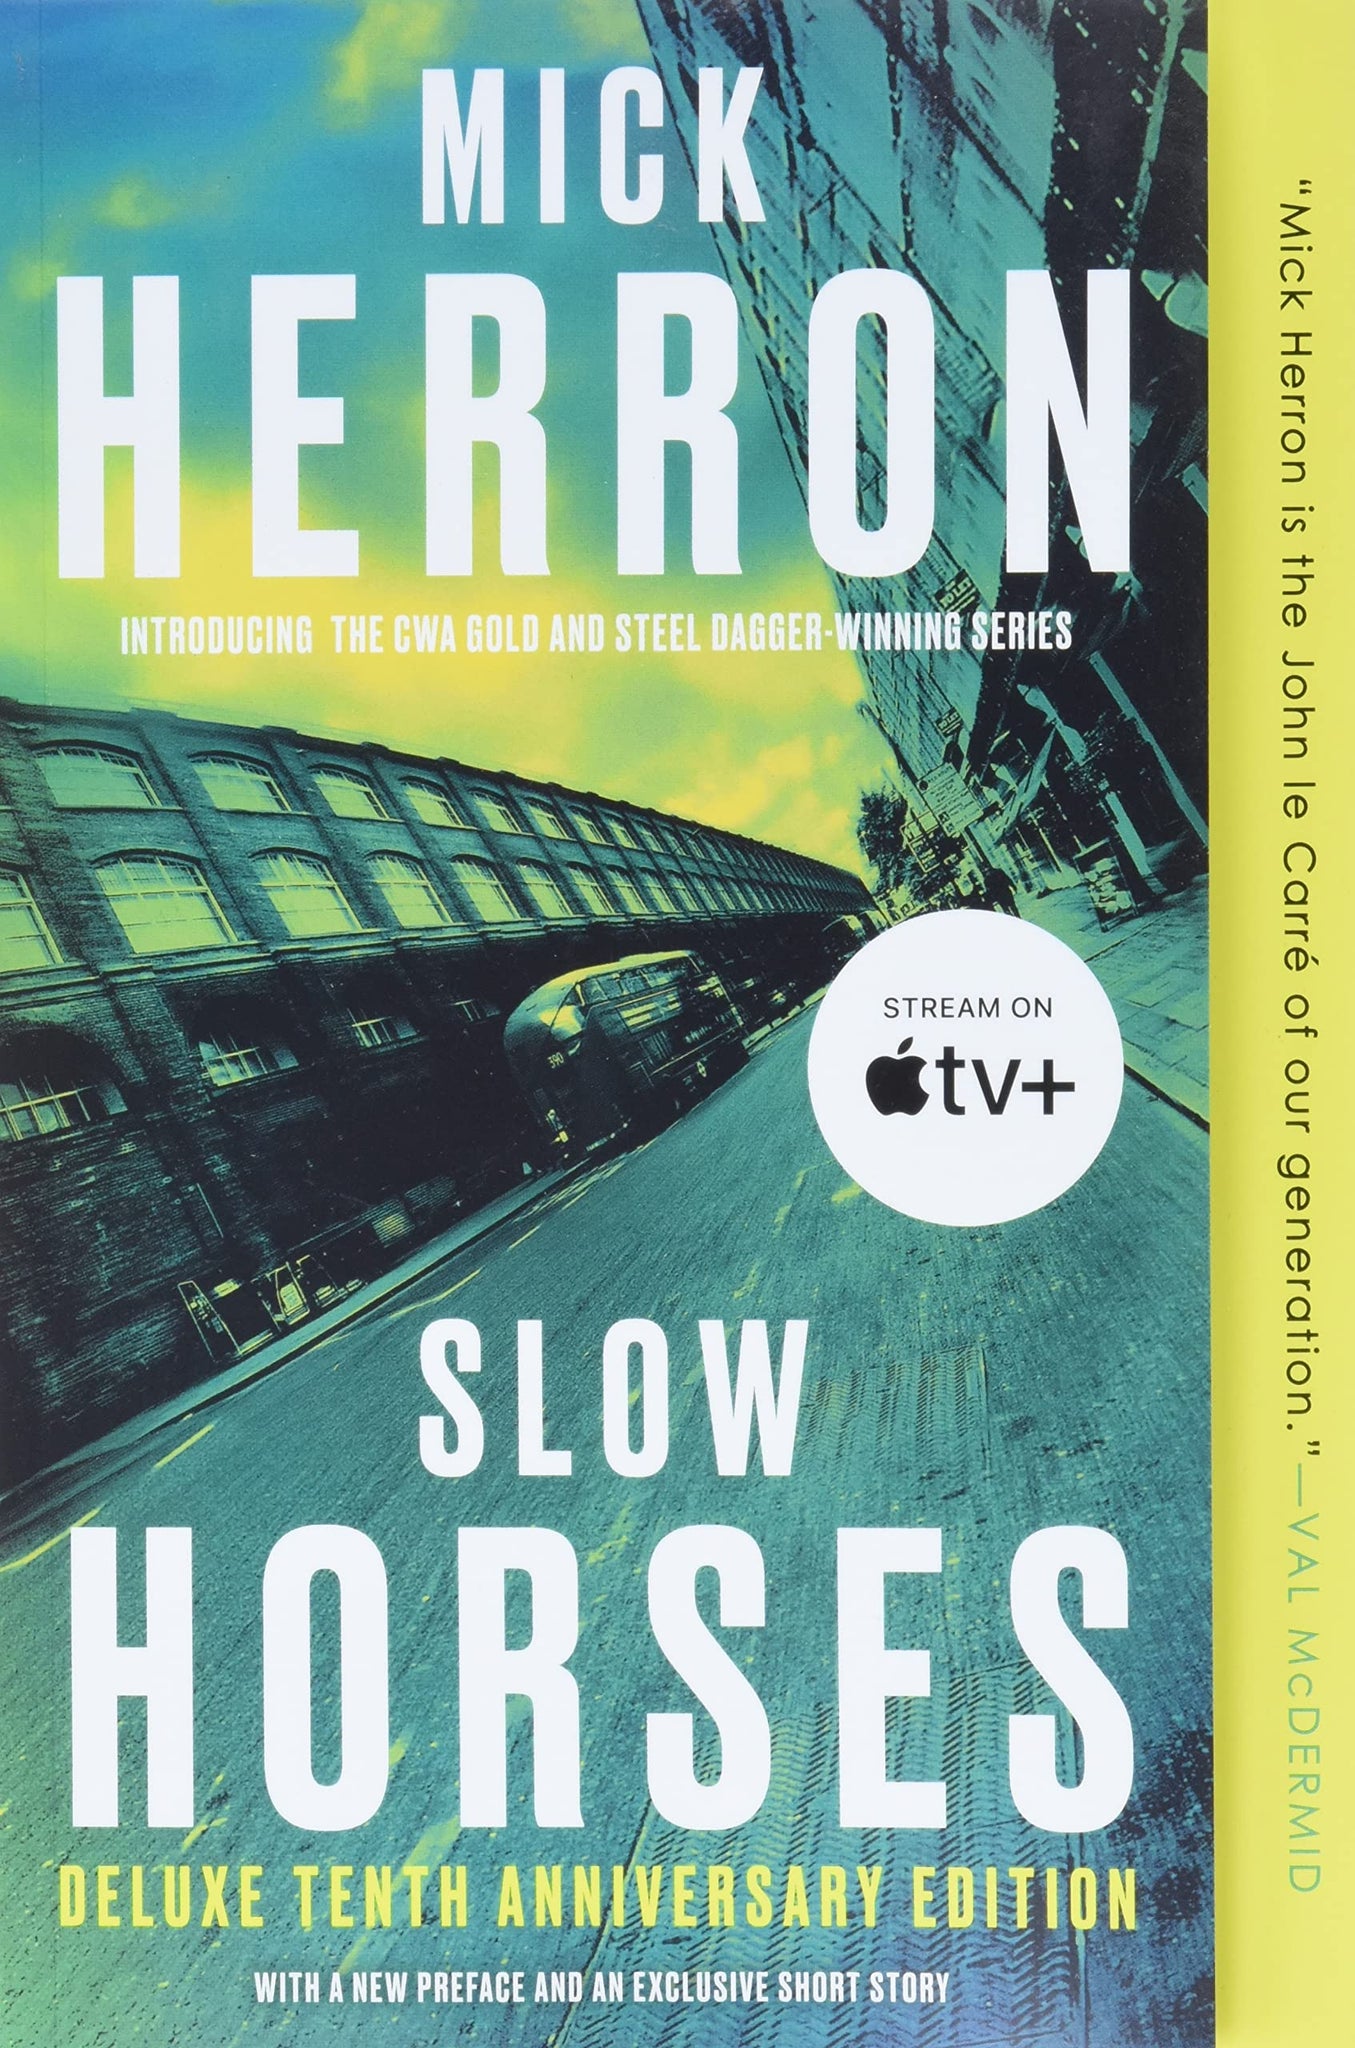 Slough House #1 : Slow Horses by Mick Herron